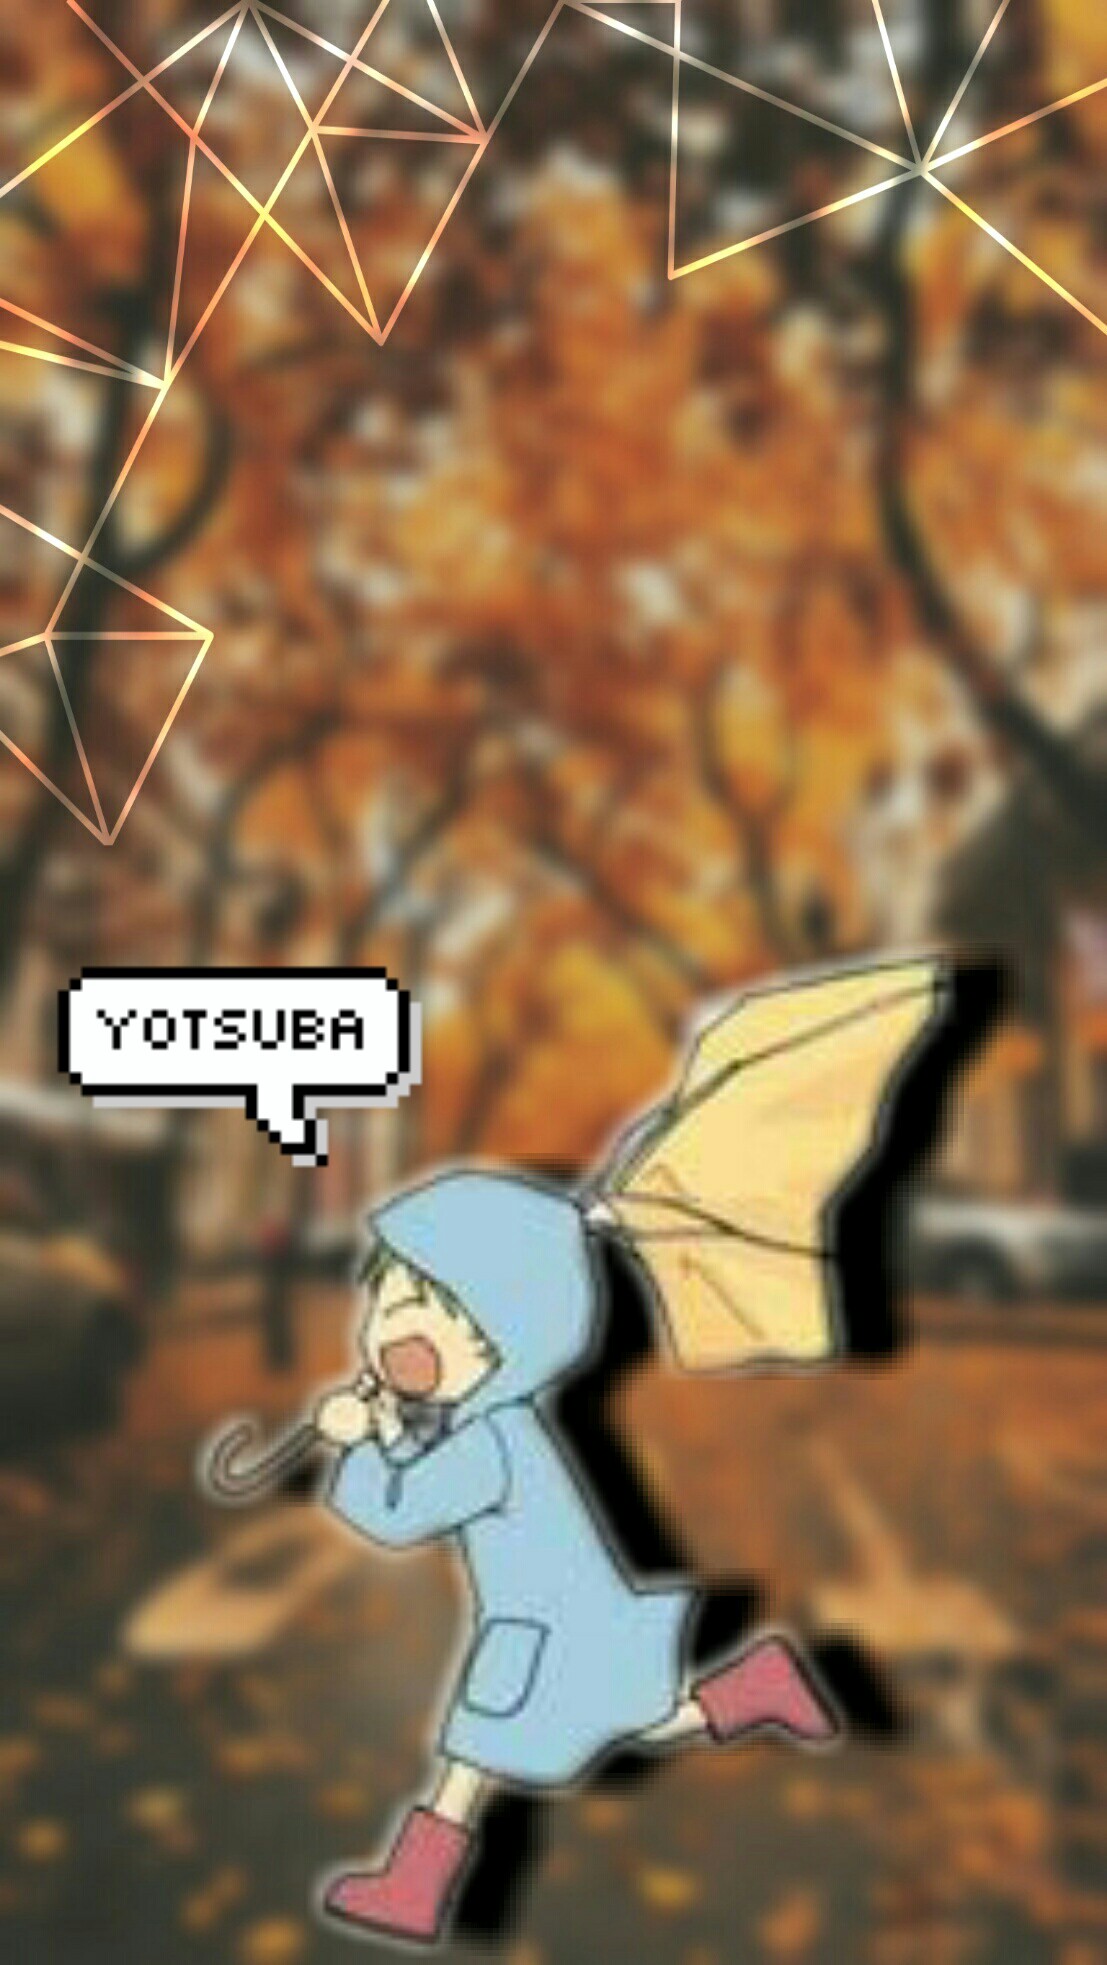 Yotsuba Phone Wallpaper 《autumn》

made By Me - Autumn - HD Wallpaper 